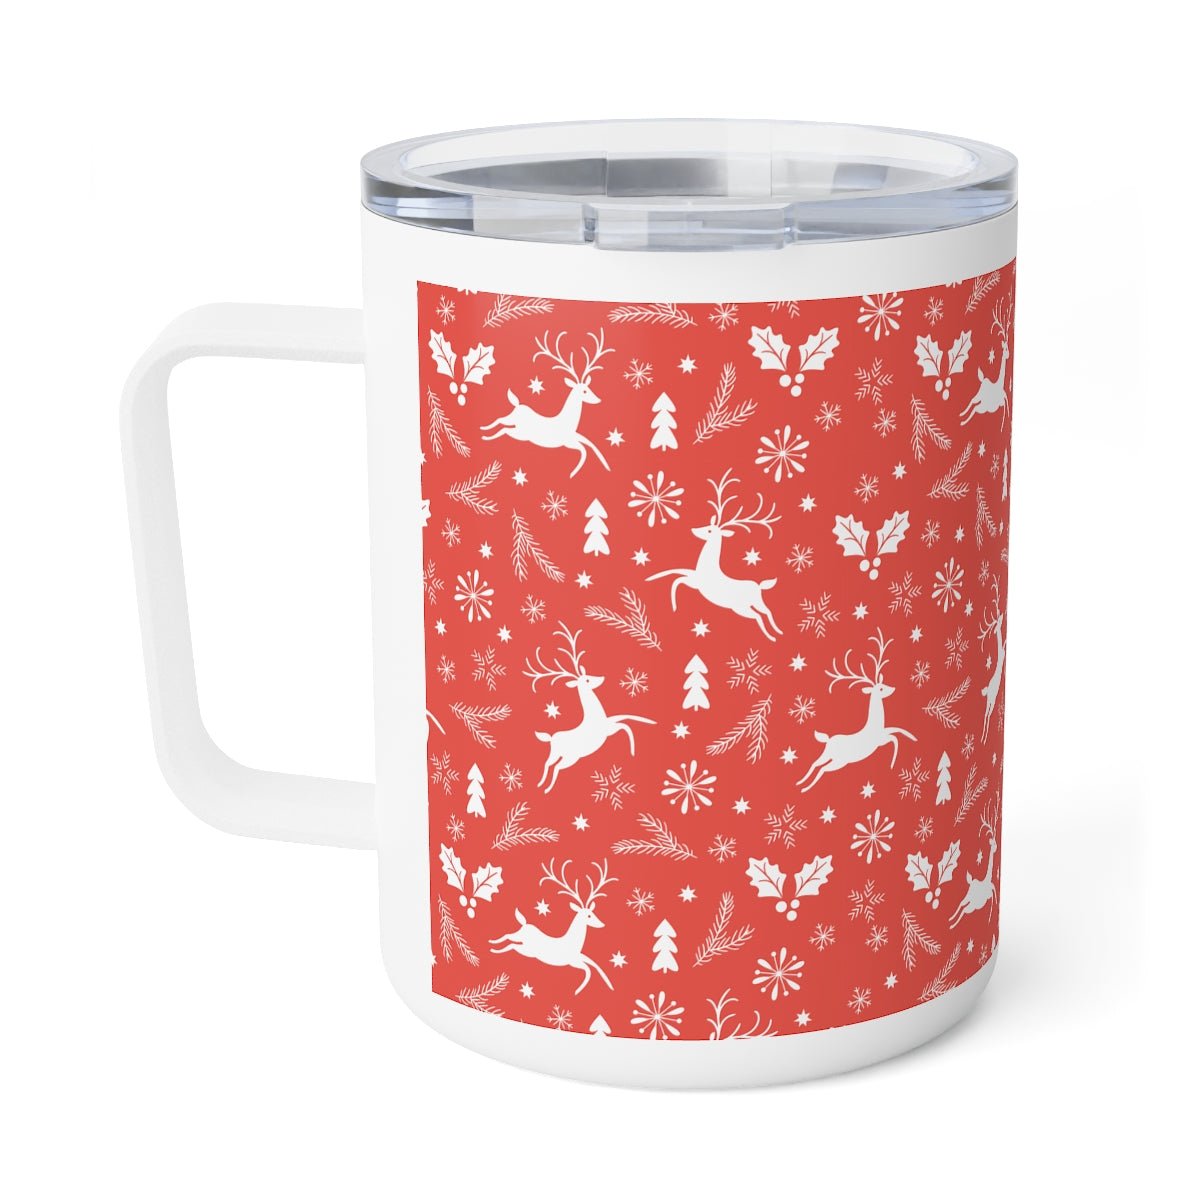 Christmas Reindeers Insulated Coffee Mug, 10oz - Puffin Lime